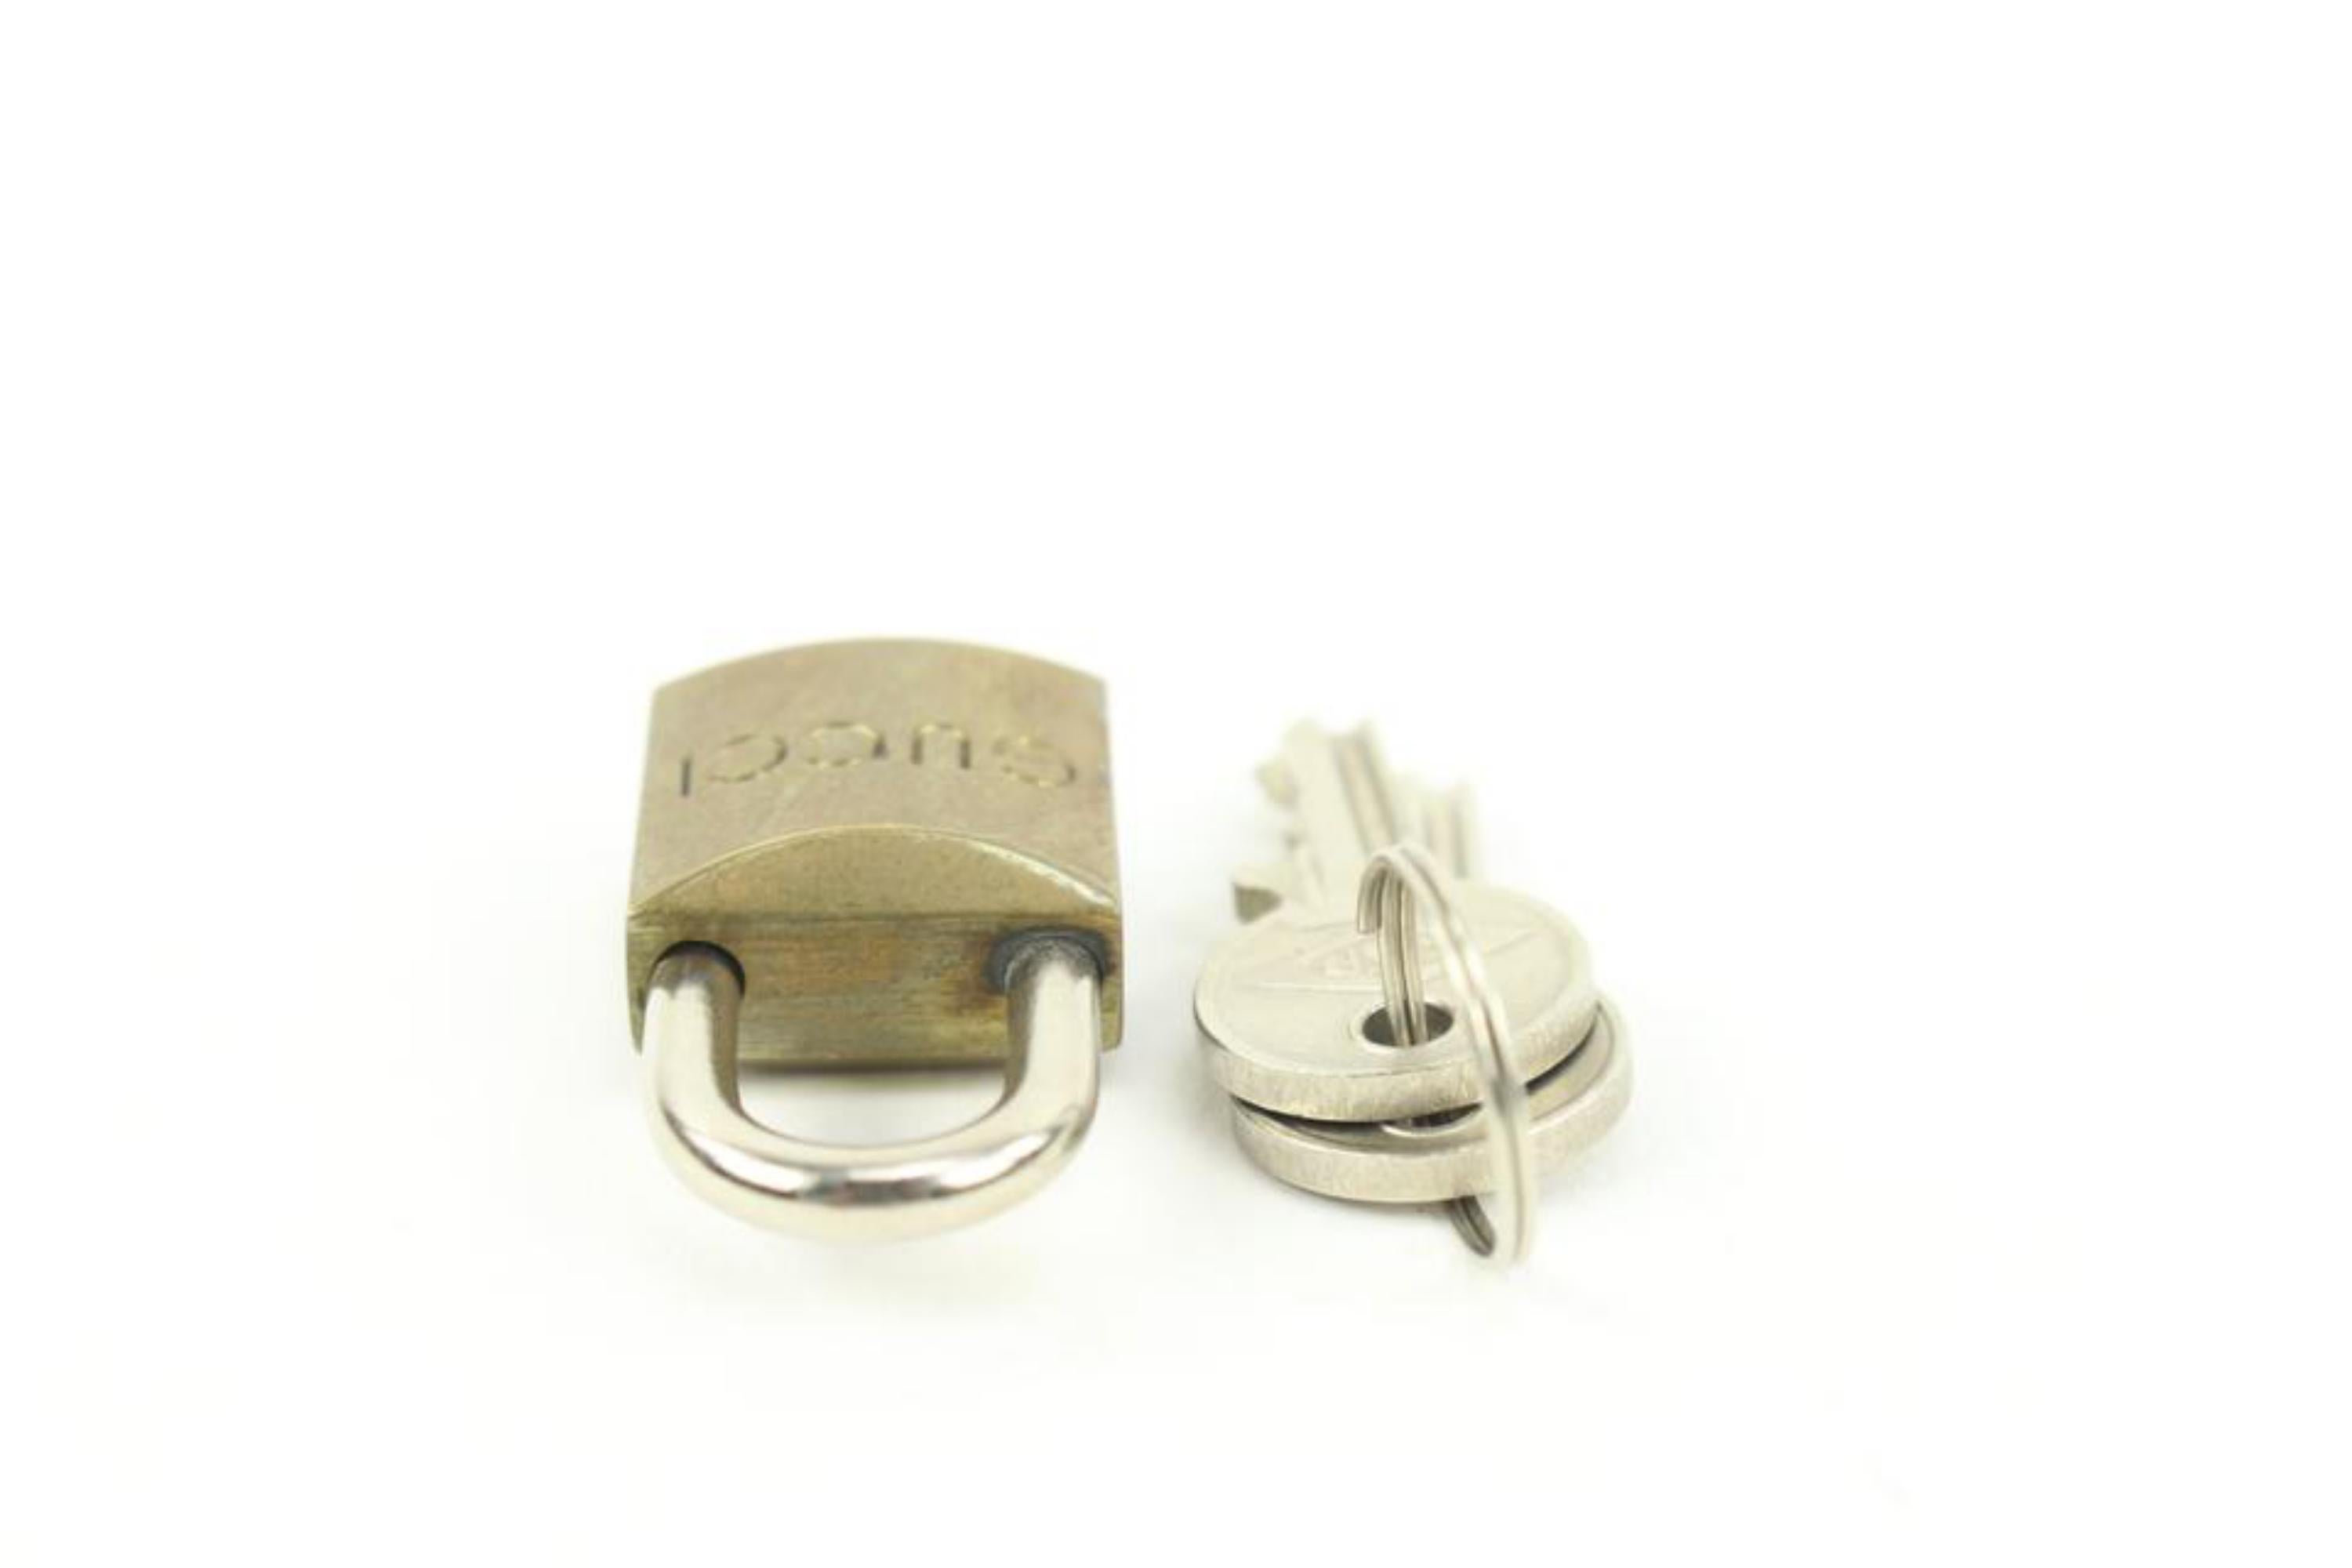 Gucci Brass GG Lock and Key Padlock Bag Charm Cadena 11g222s For Sale 3